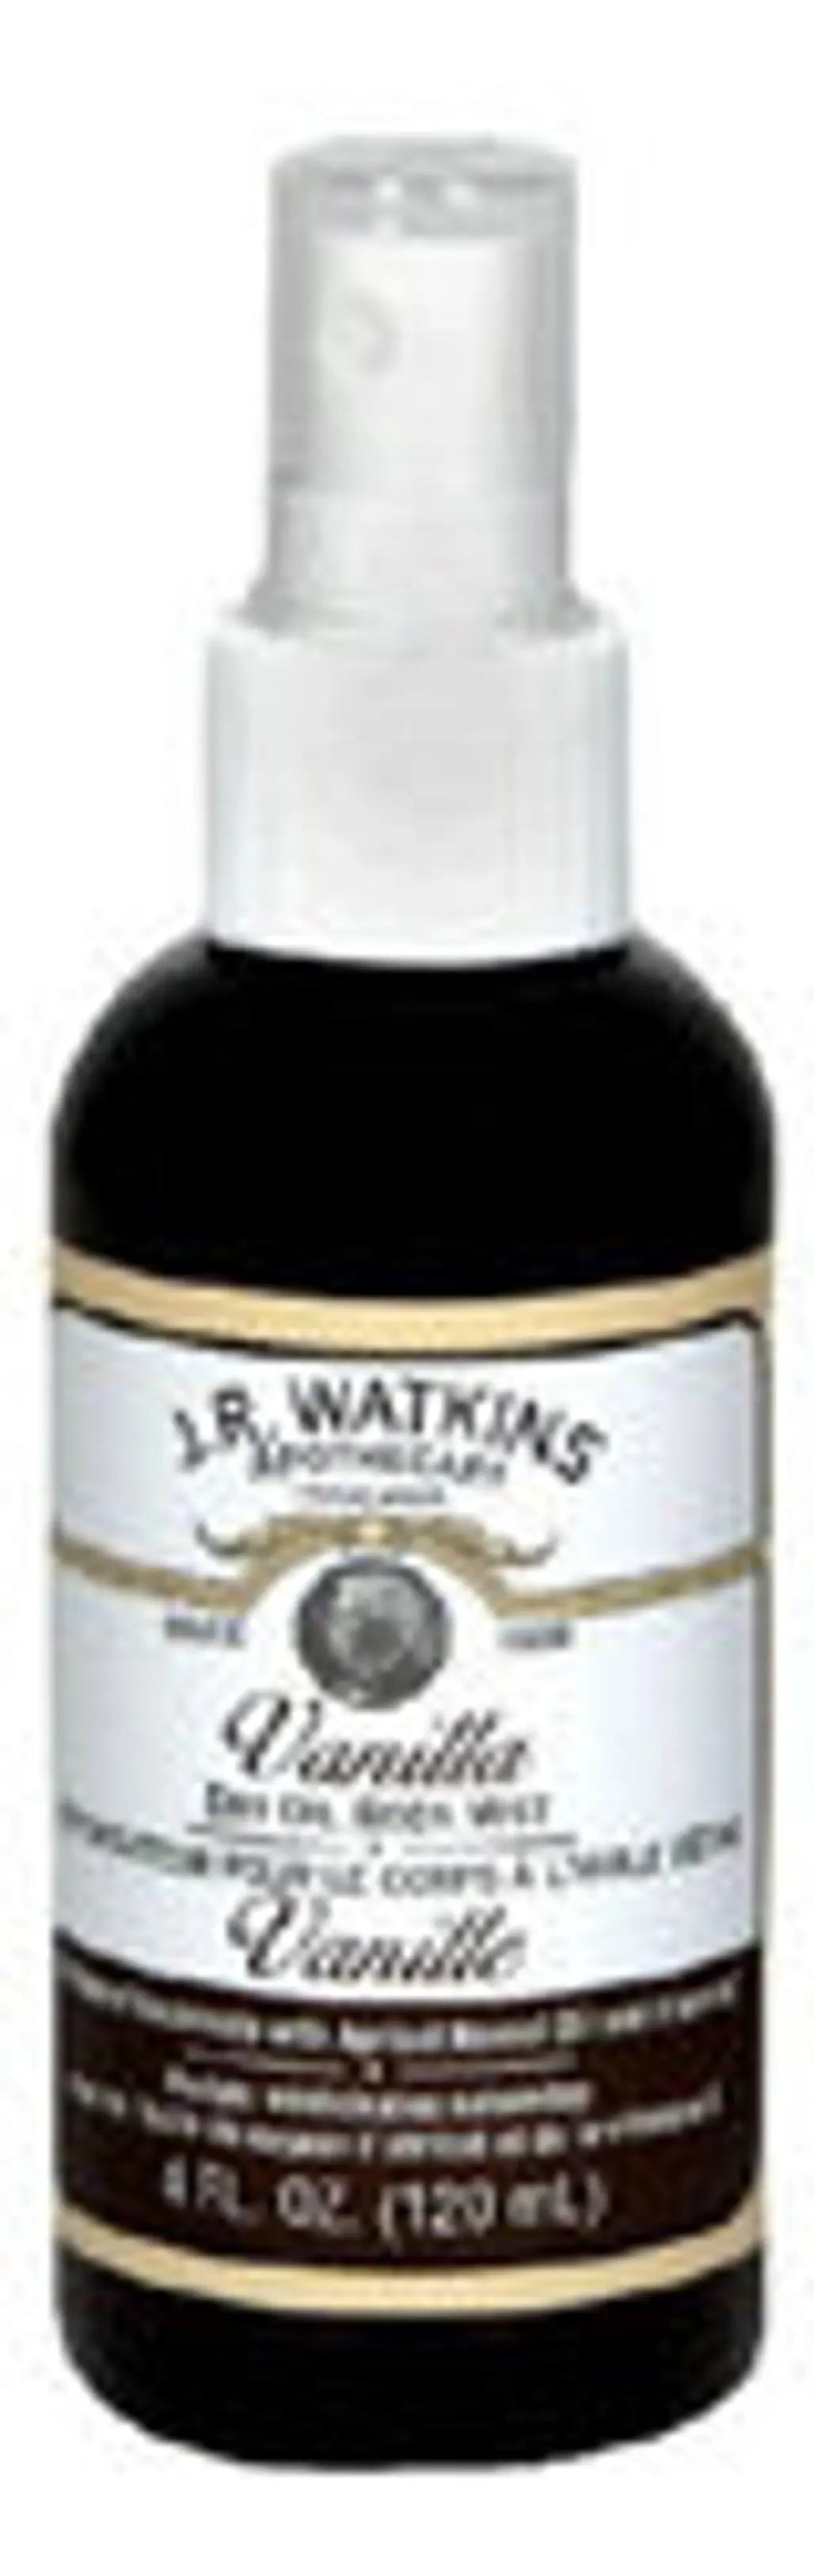 J.R. Watkins Dry Oil Body Mist